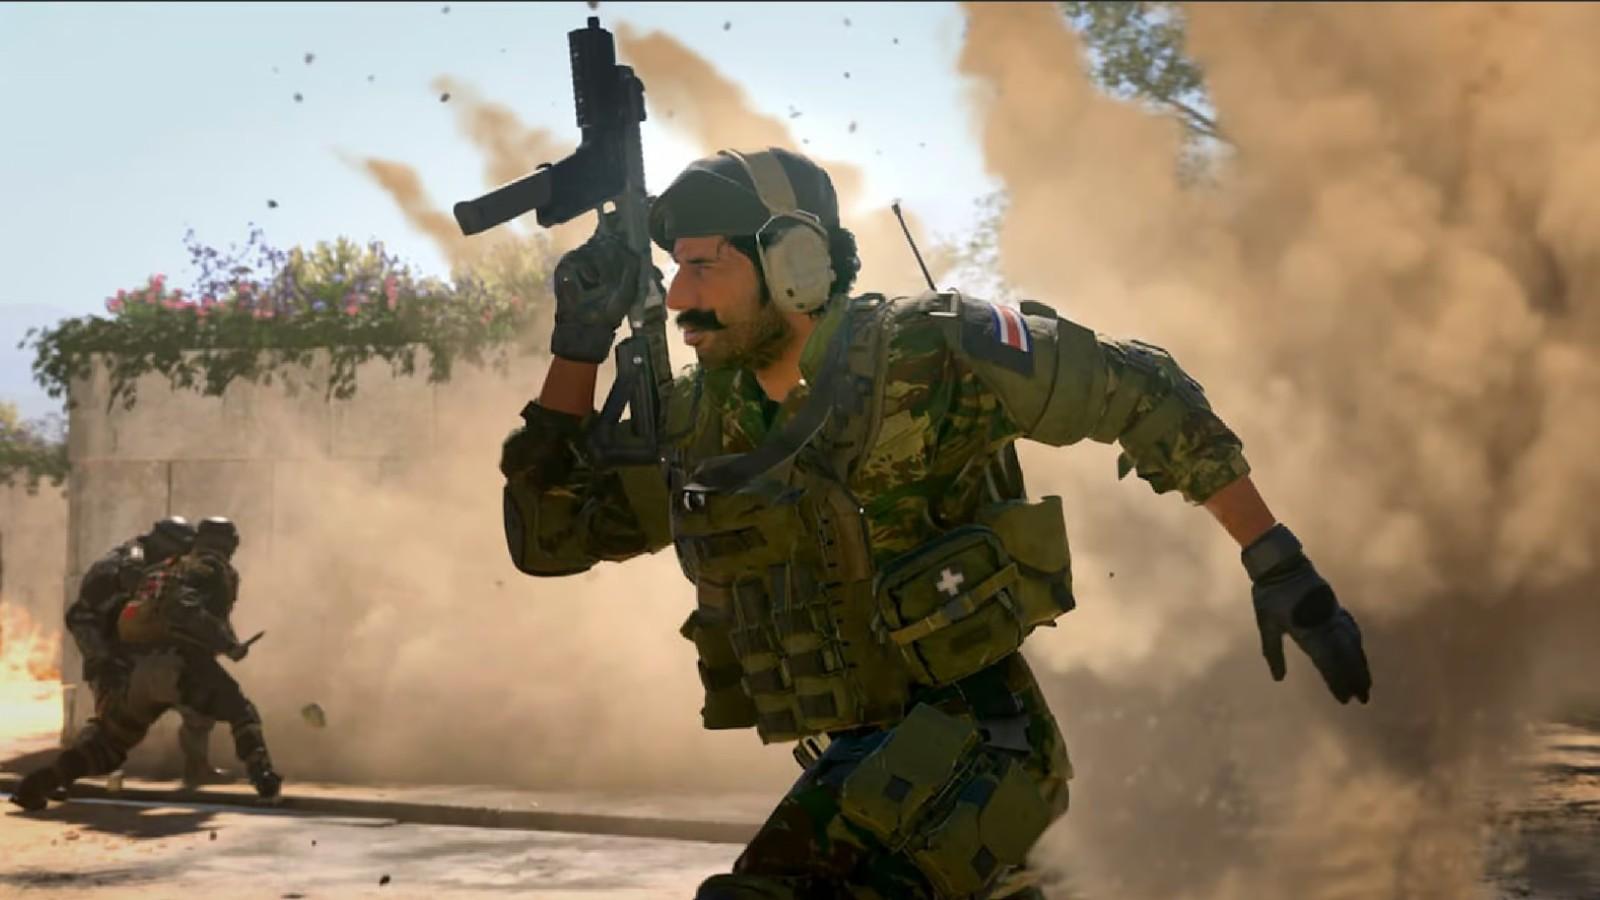 Modern Warfare 2 players call for John Wick skin to be made for Oni -  Dexerto